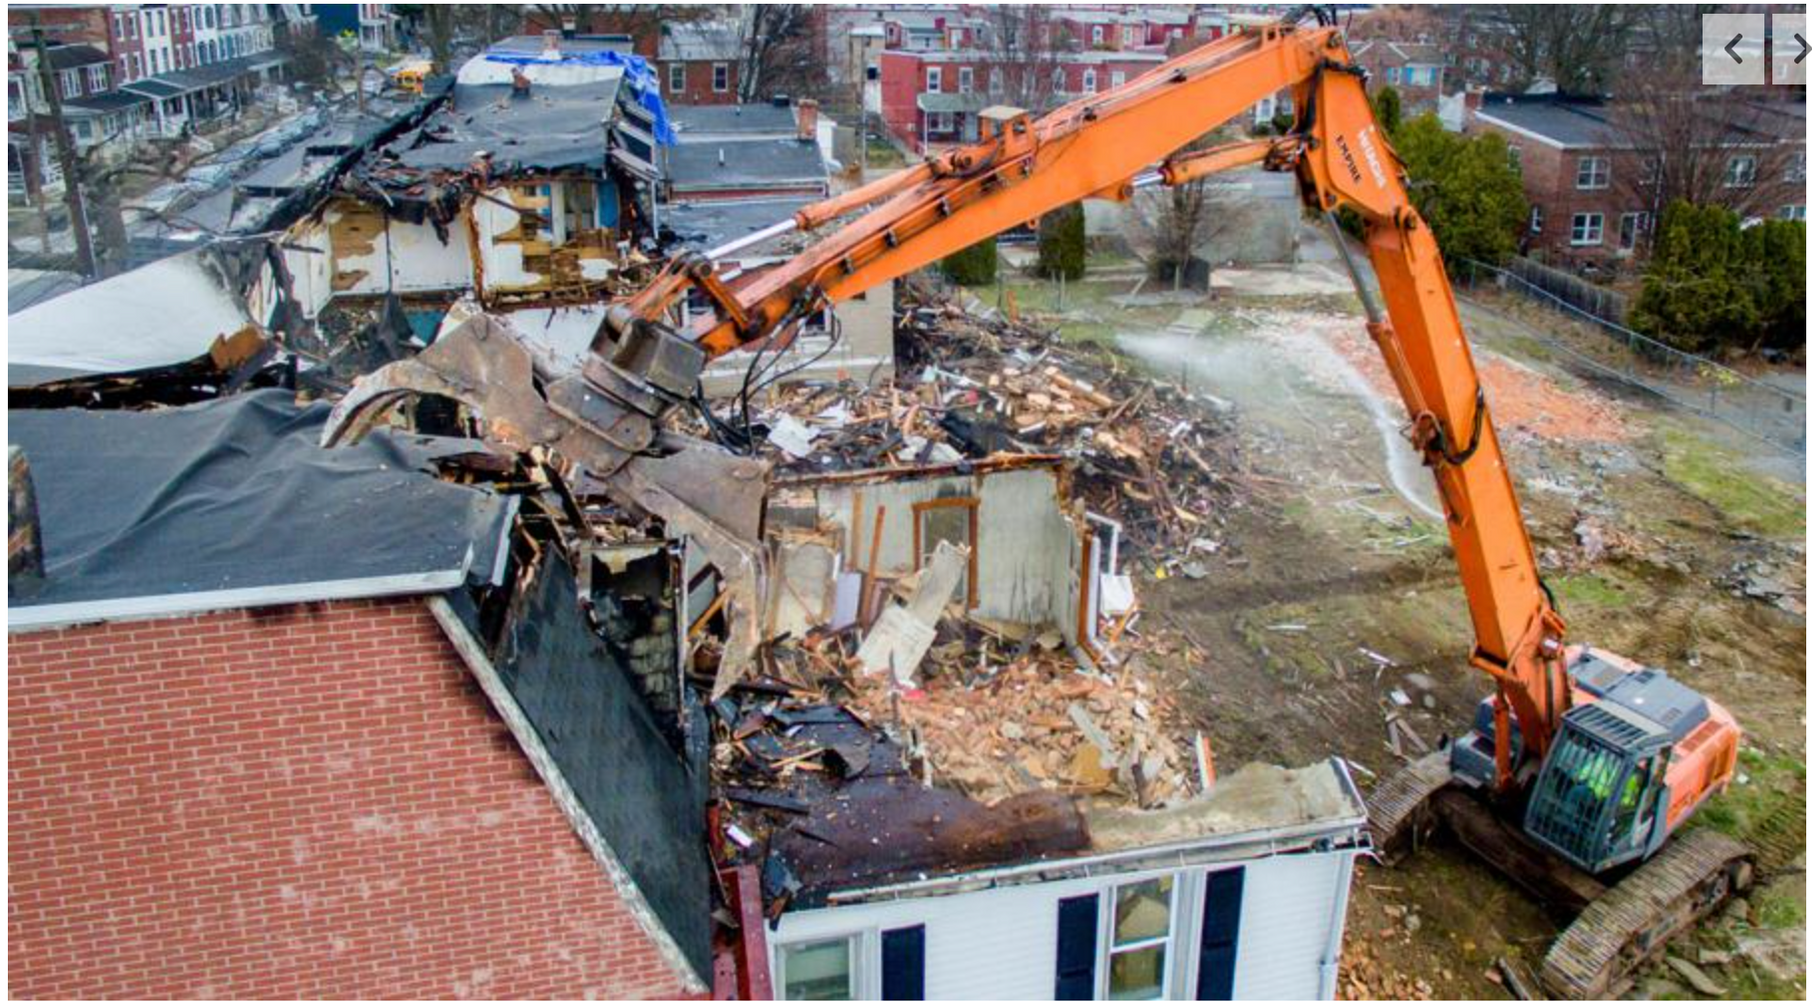 A large orange excavator is demolishing a building.